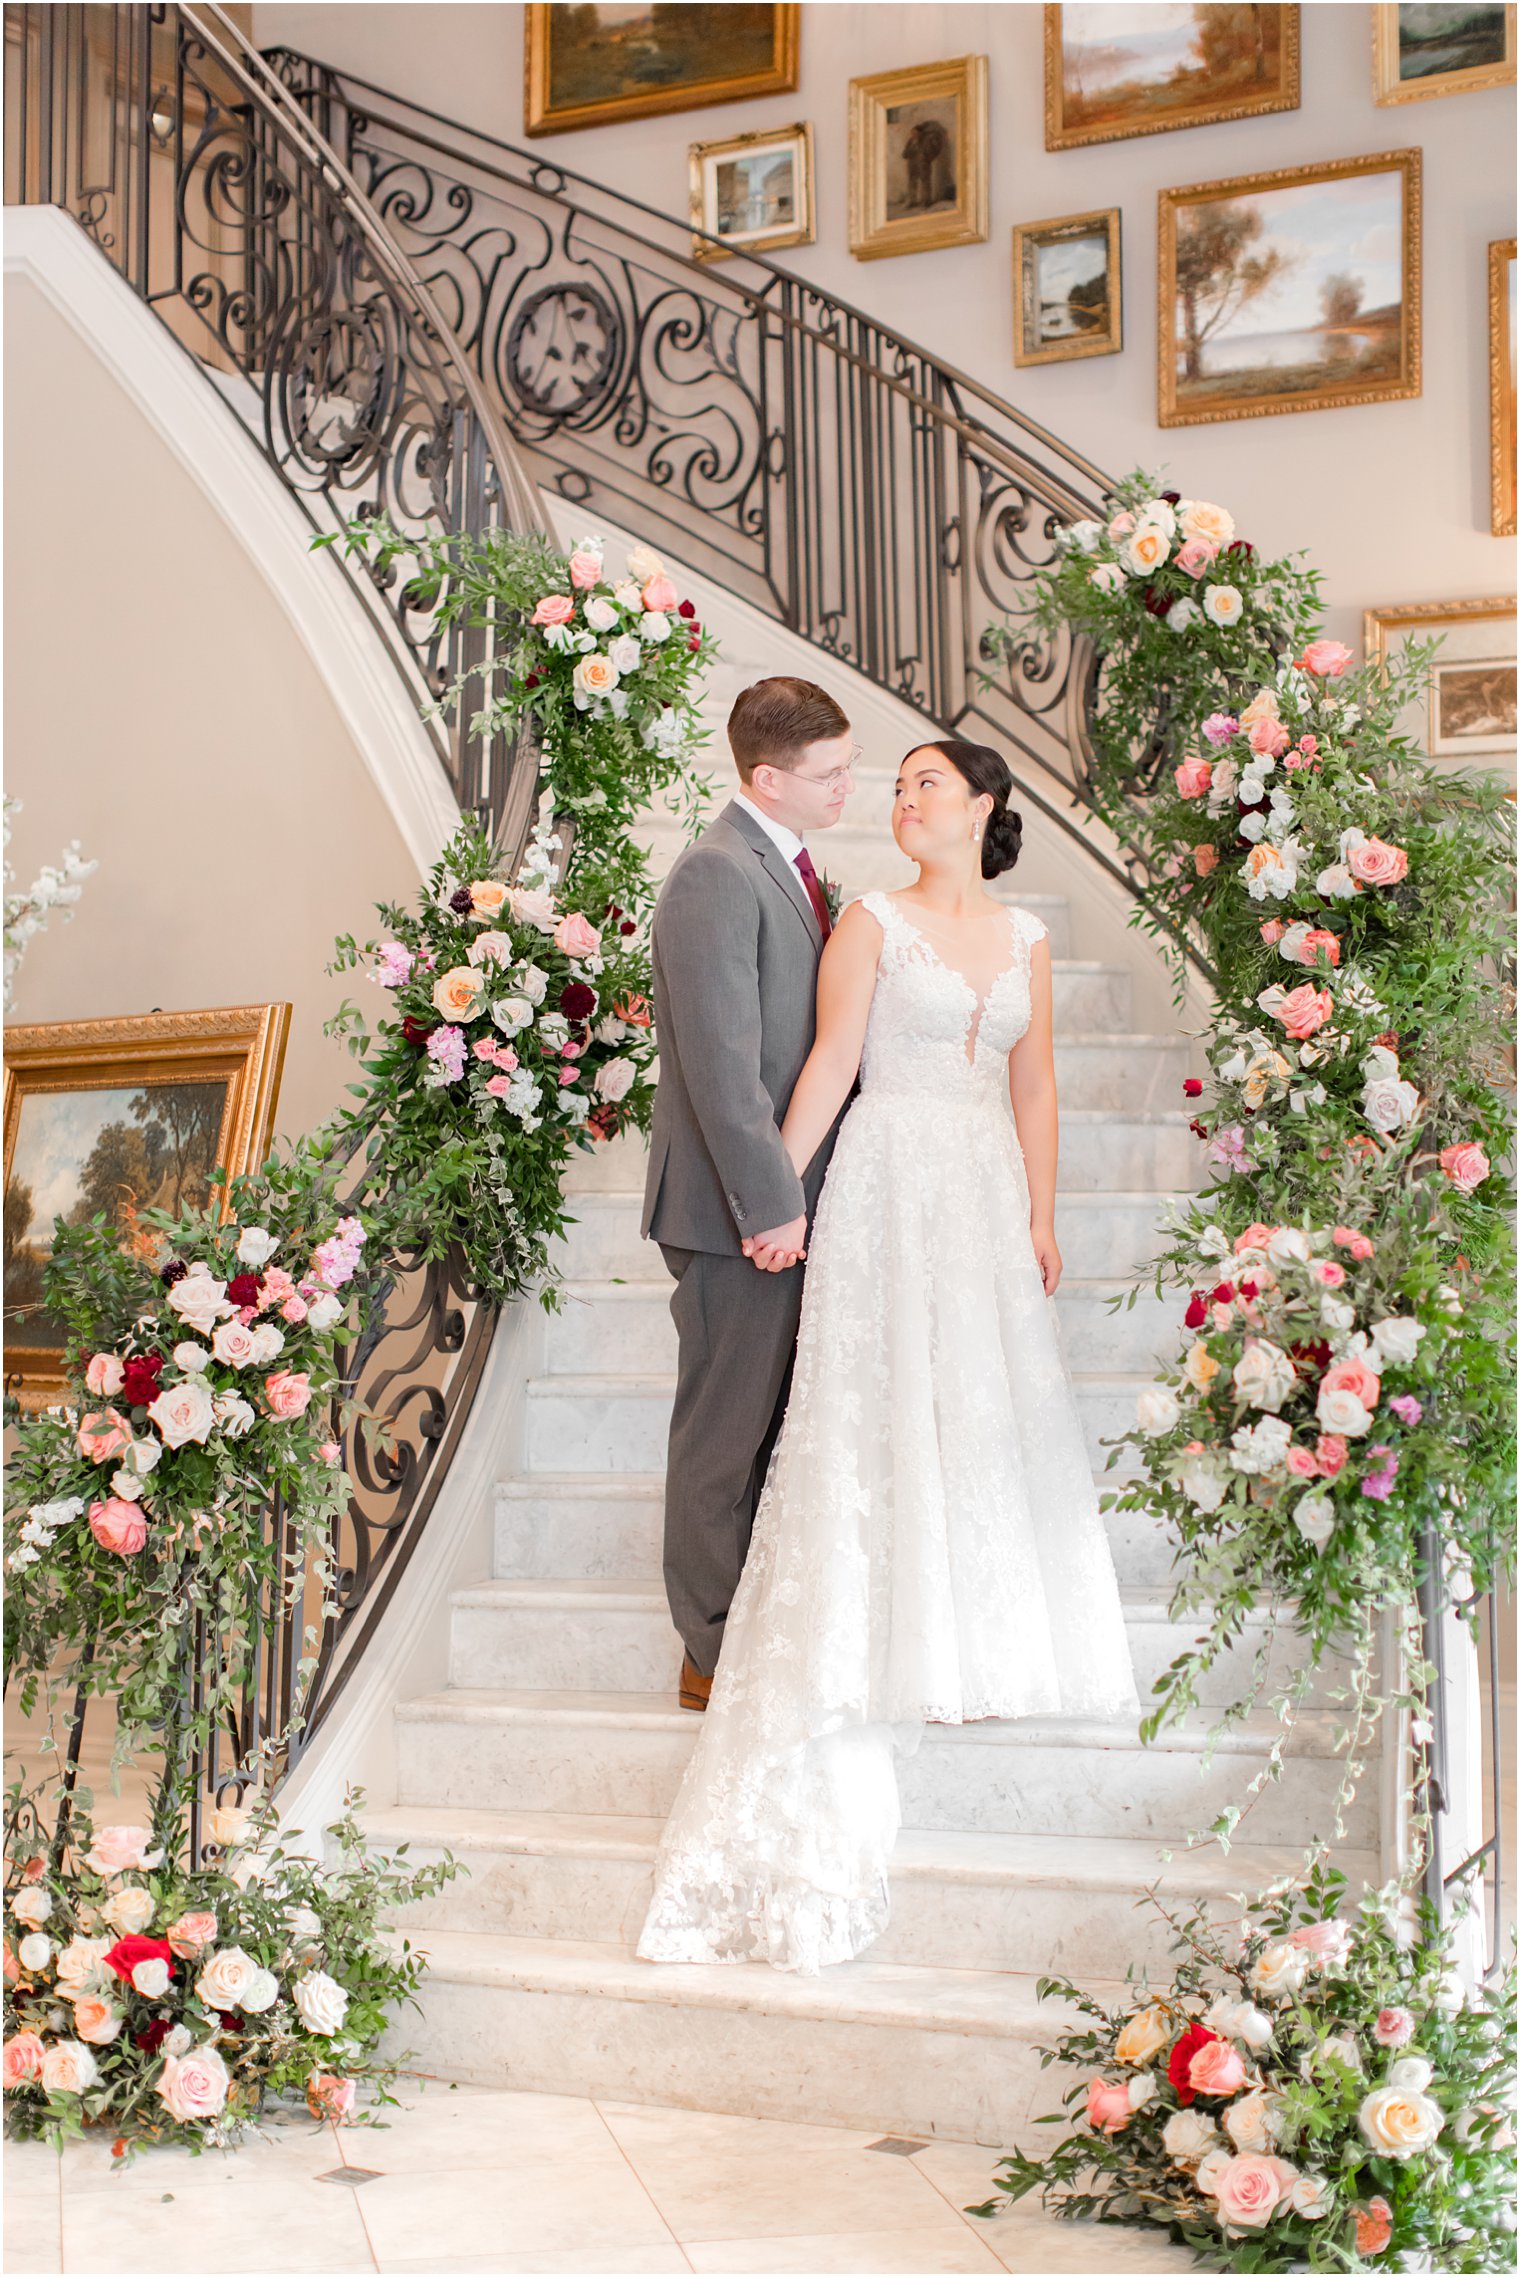 Park Chateau Estate wedding photos by Idalia Photography